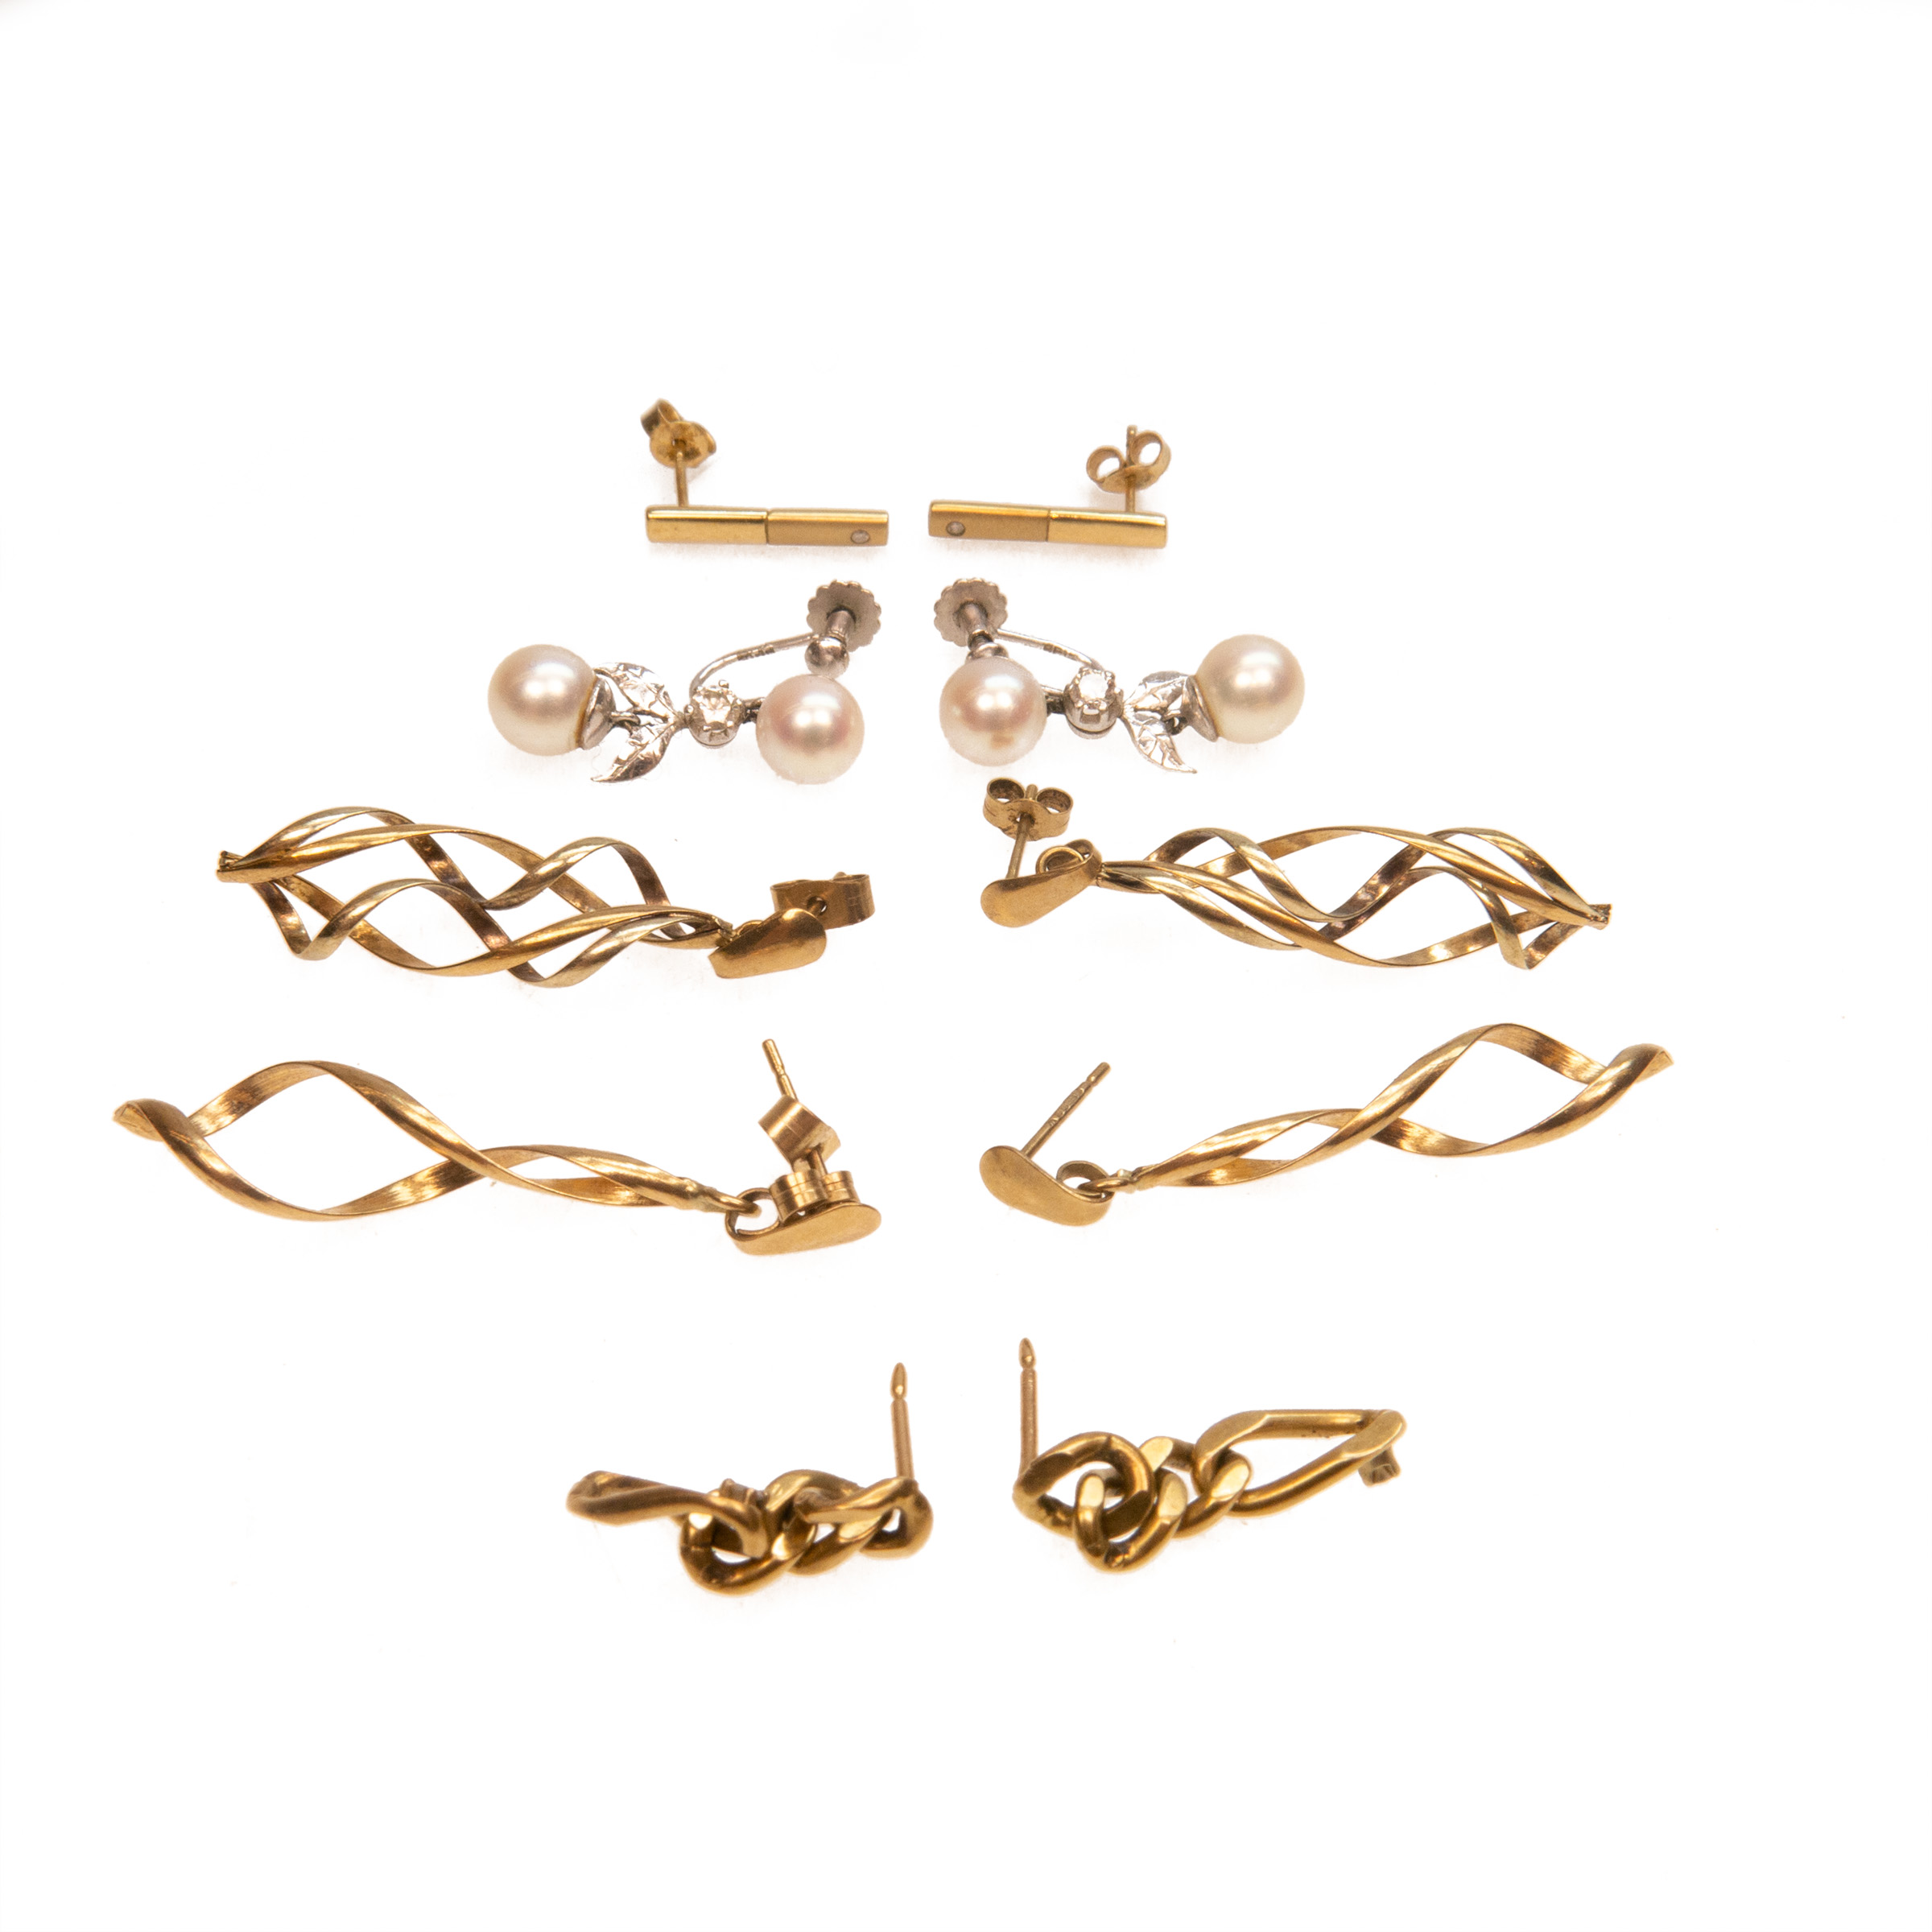 5 X Pairs of 9K Gold Earrings